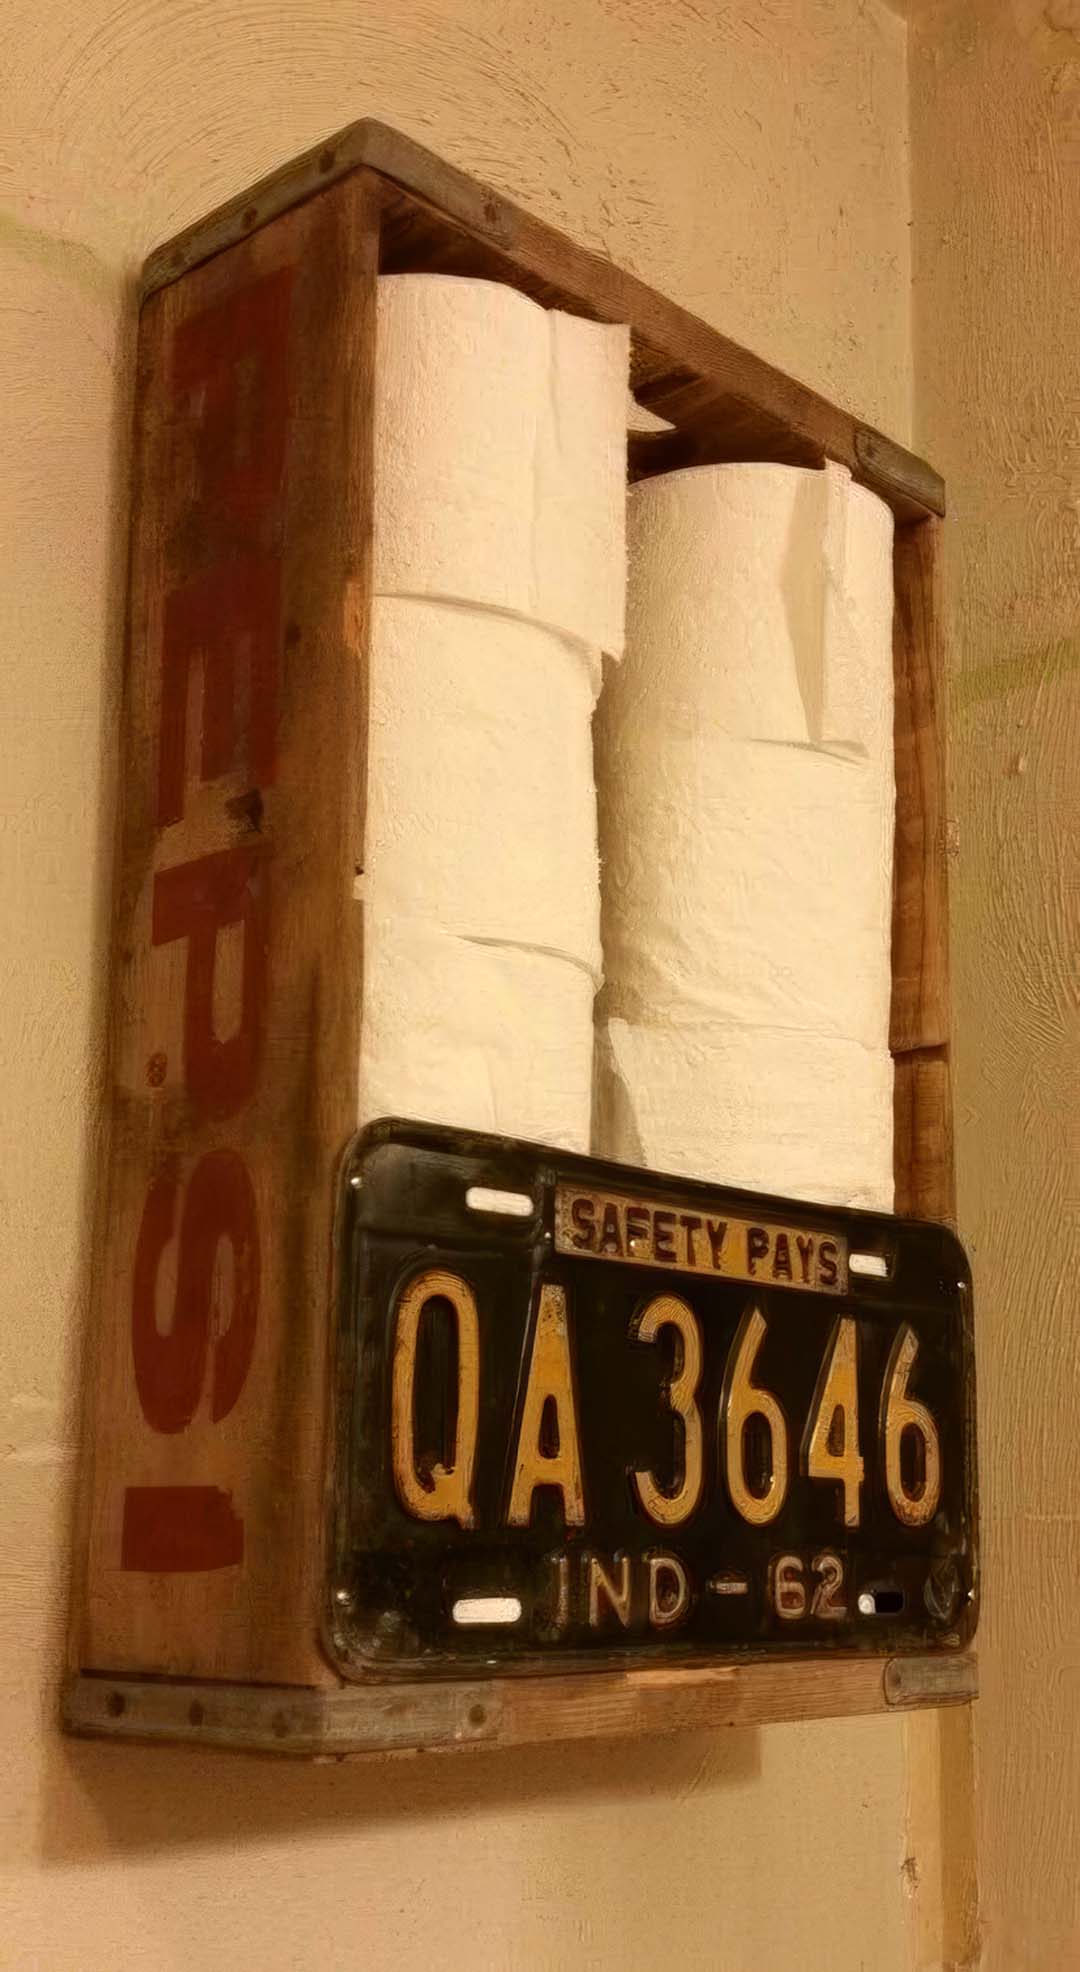 License plate toilet paper holder